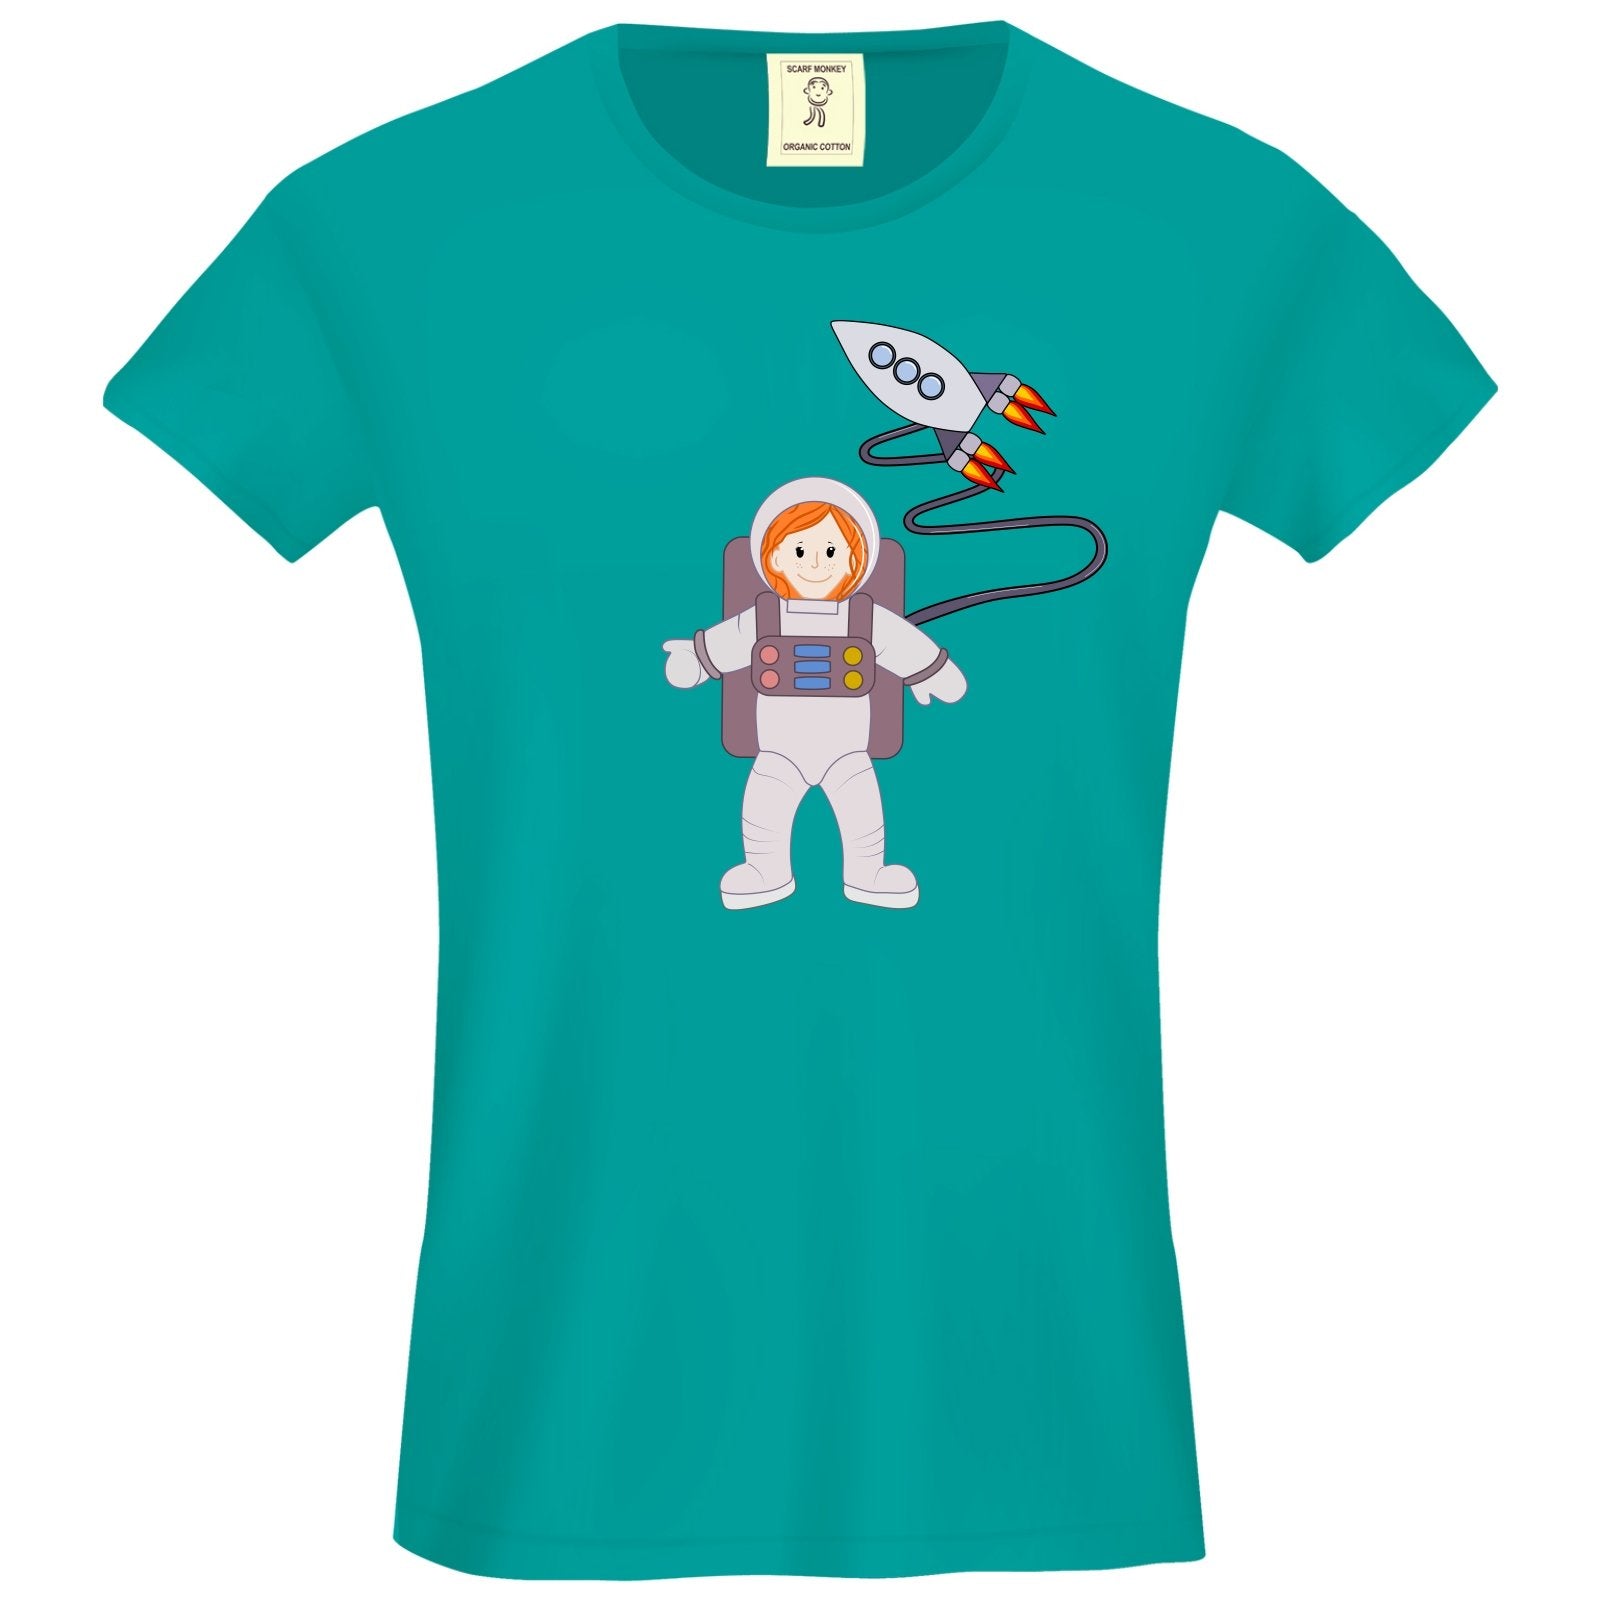 Space Walk Susie Organic Cotton Girls T-Shirt - Scarf Monkey